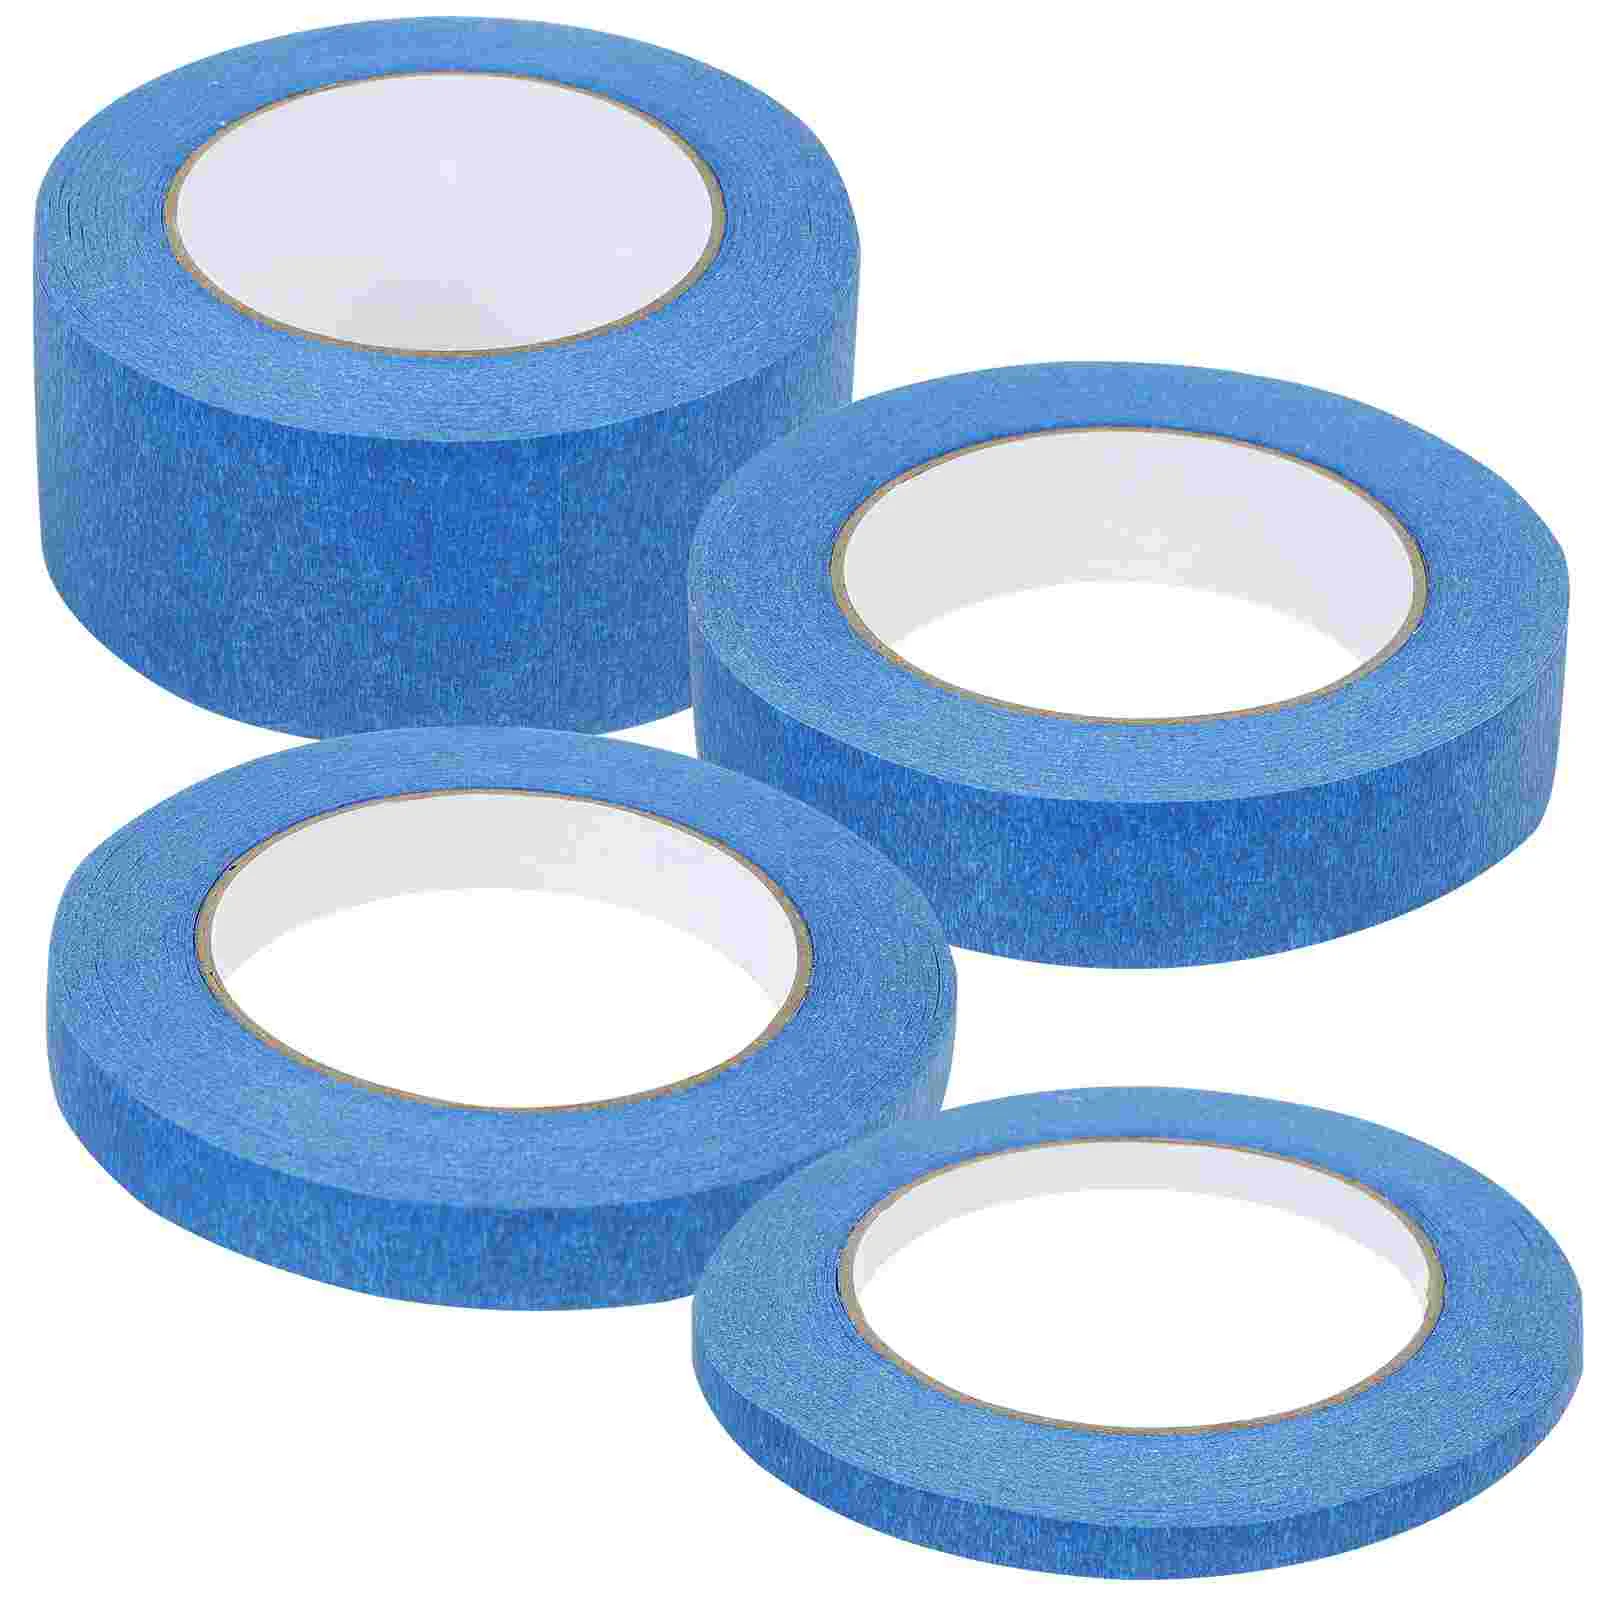 

4 Rolls Blue Tape Masking Tape Painters Tape DIY Masking Tape Crafting Masking Tape